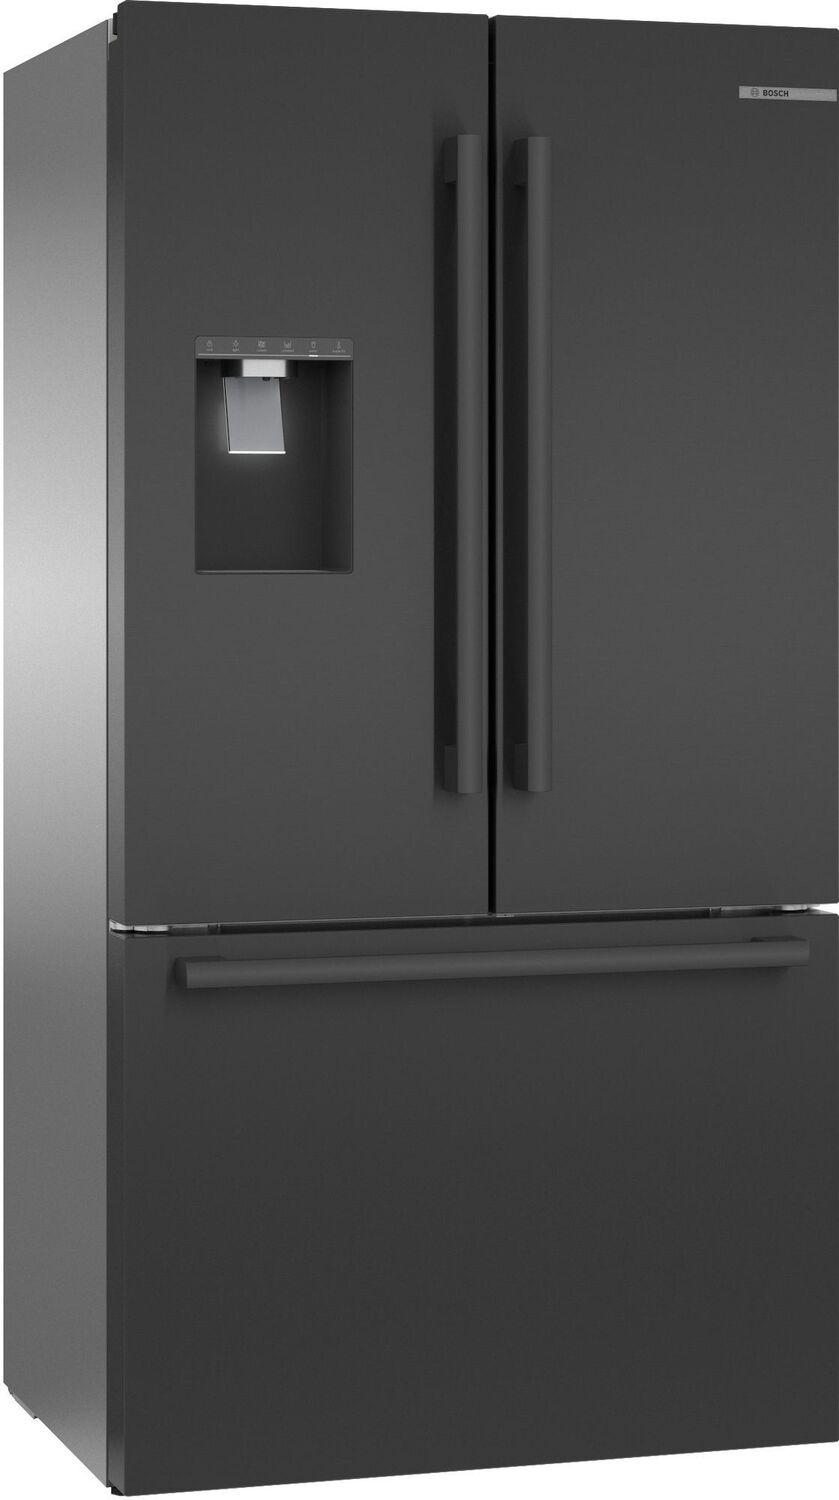 Bosch 500 Series French Door Bottom Mount Refrigerator 36" Black stainless steel B36CD50SNB